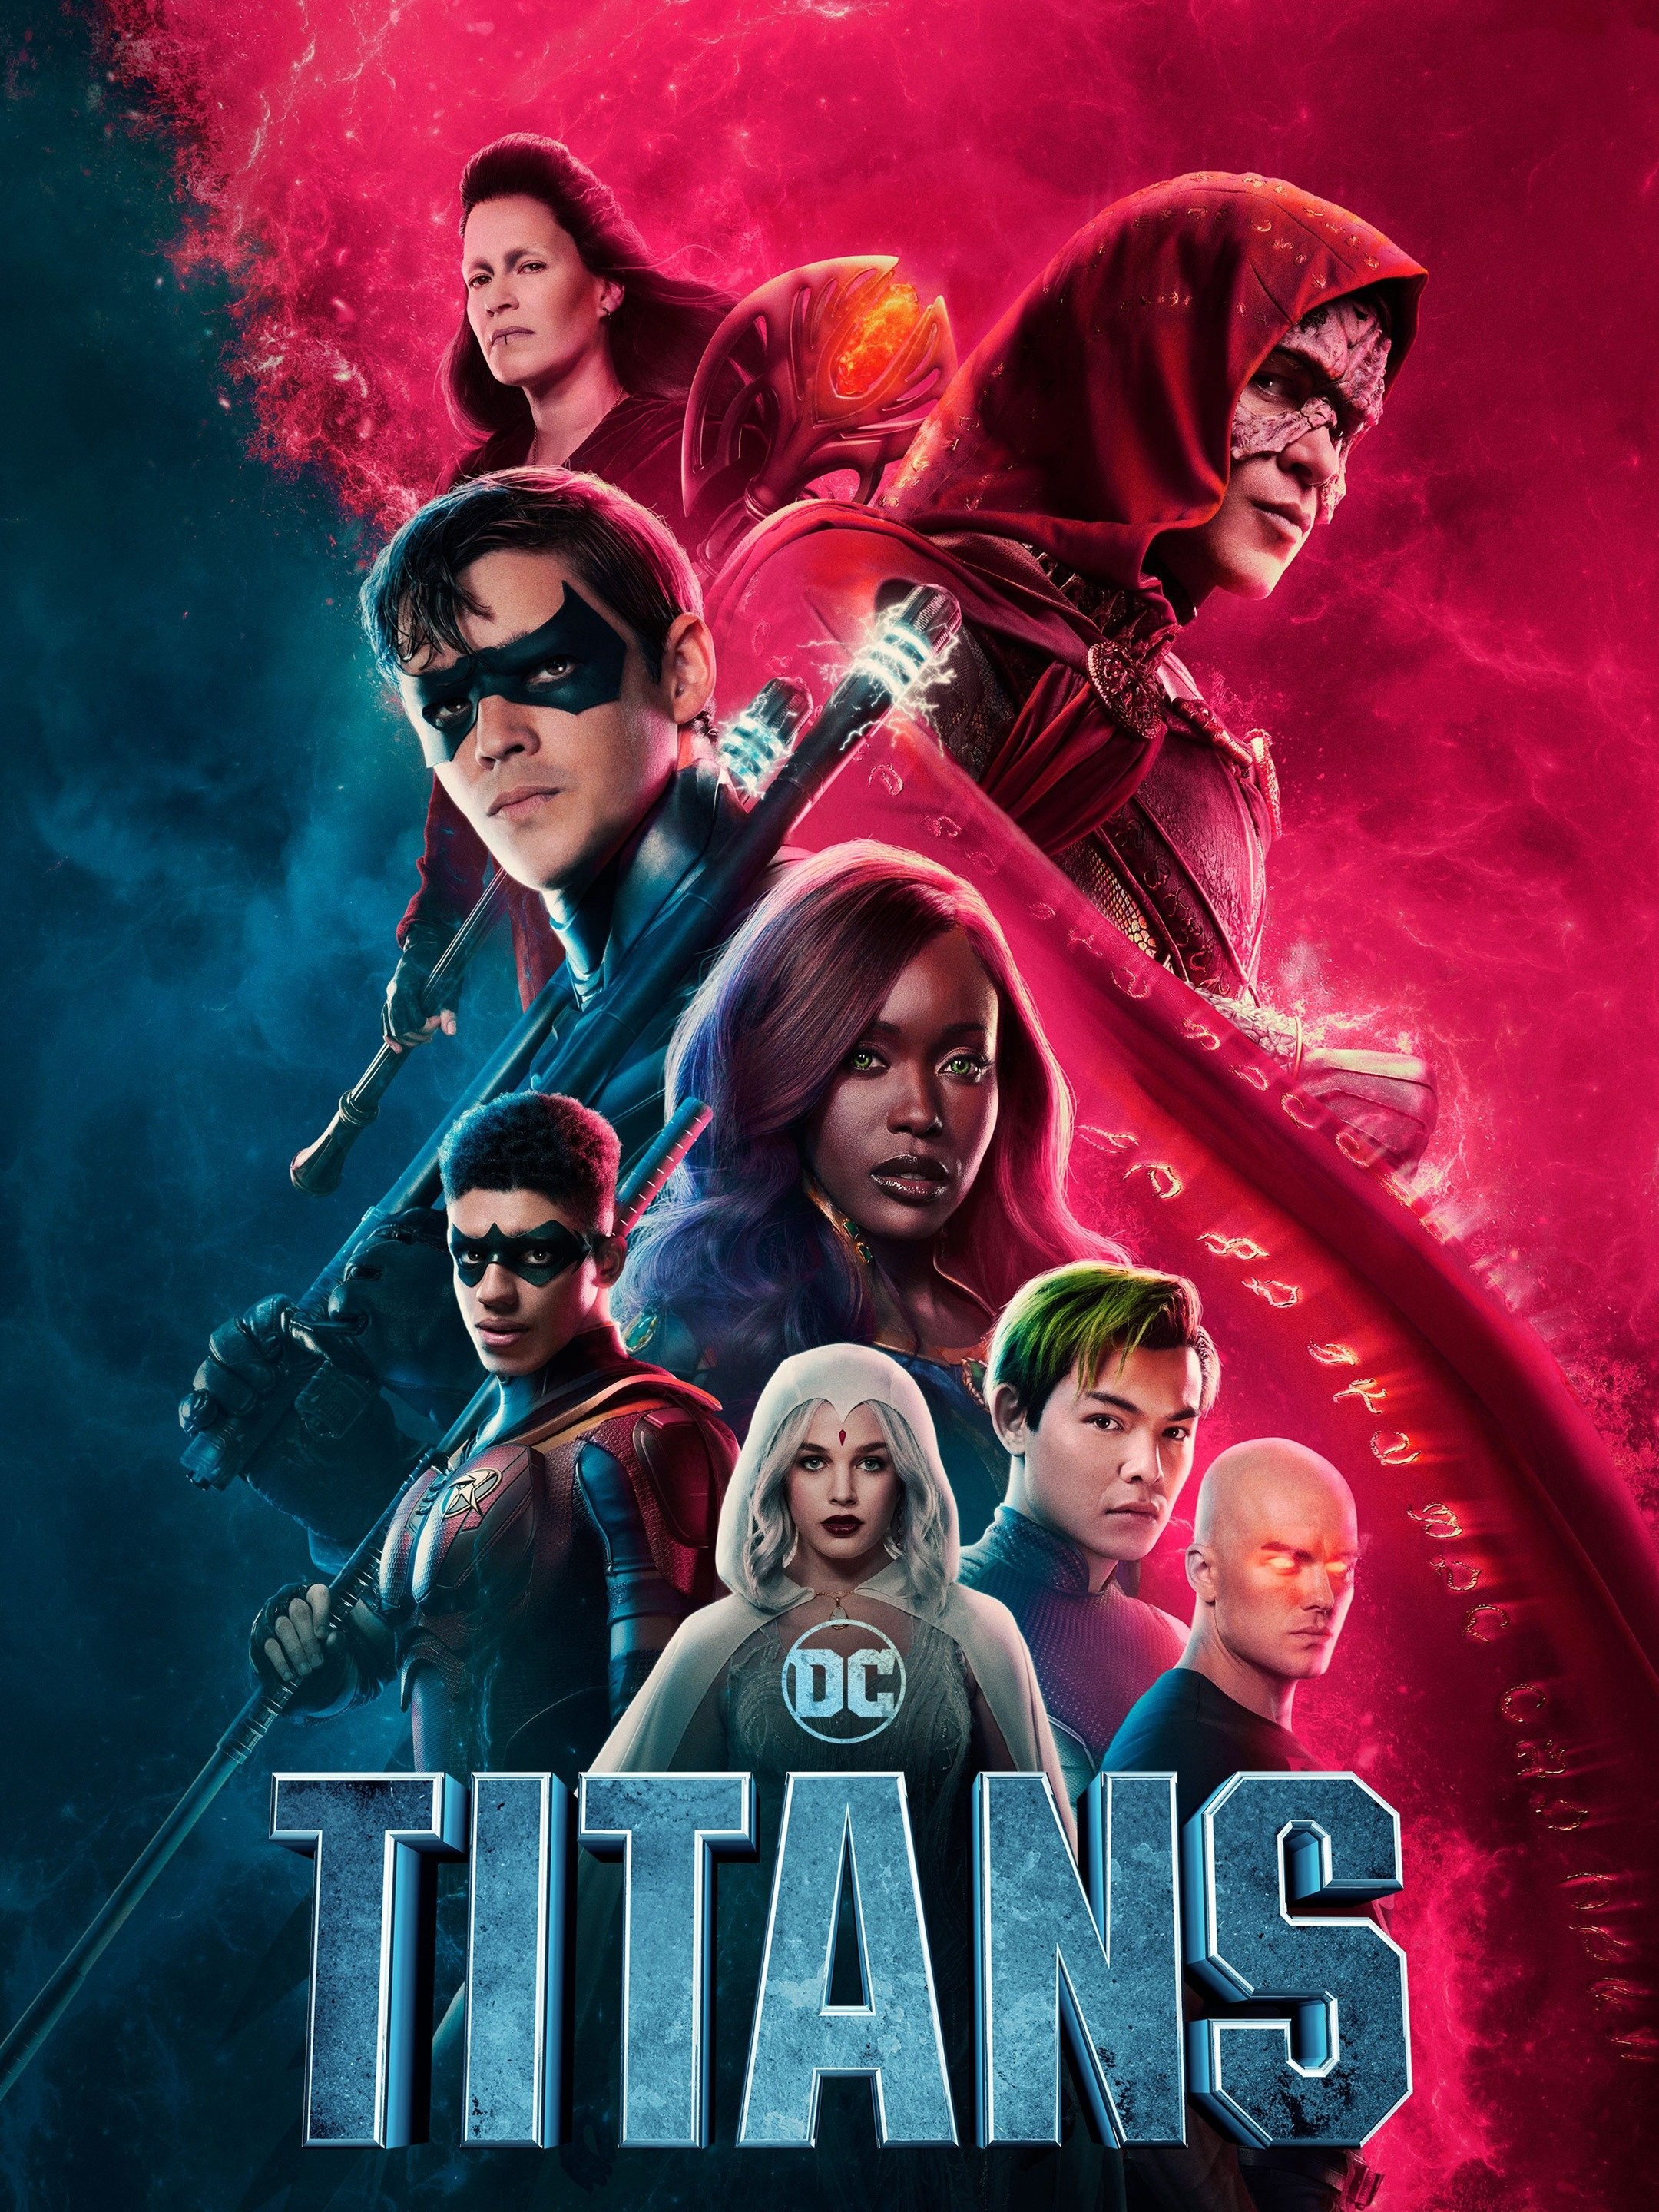 Titans (Série), Sinopse, Trailers e Curiosidades - Cinema10